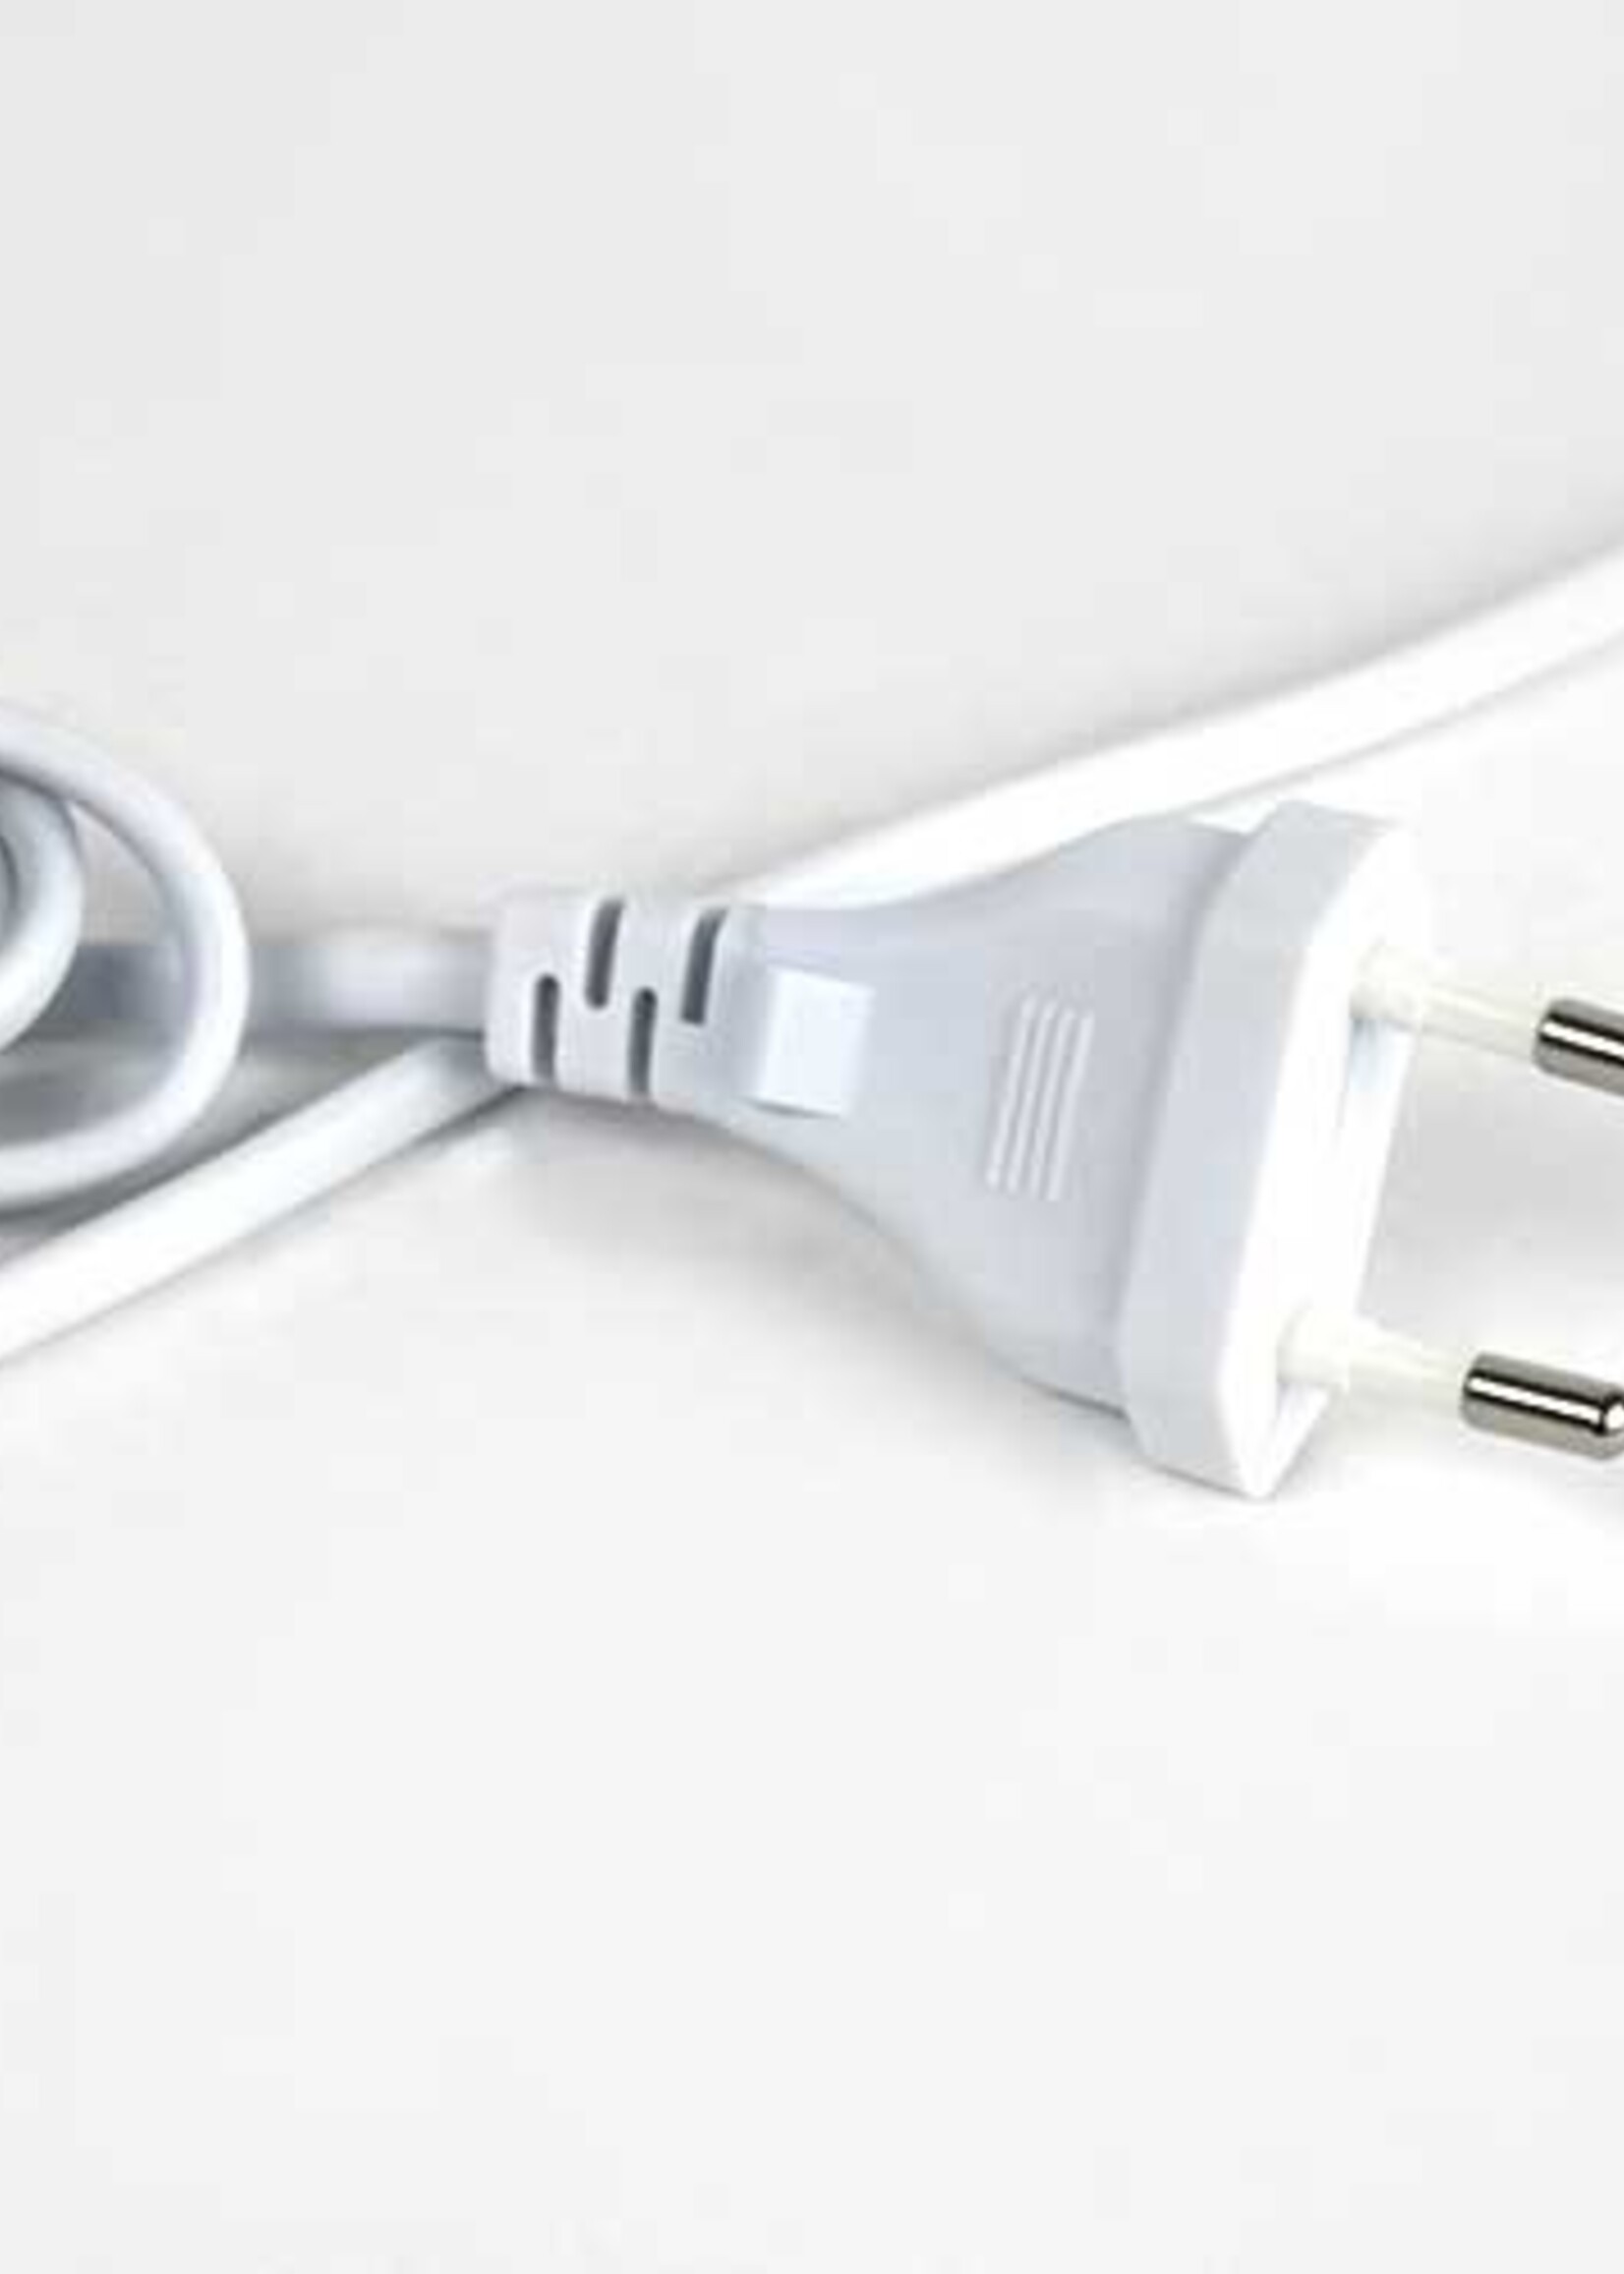 LEDWINKEL-Online Power cord with eu plug 1.5 meter 230V